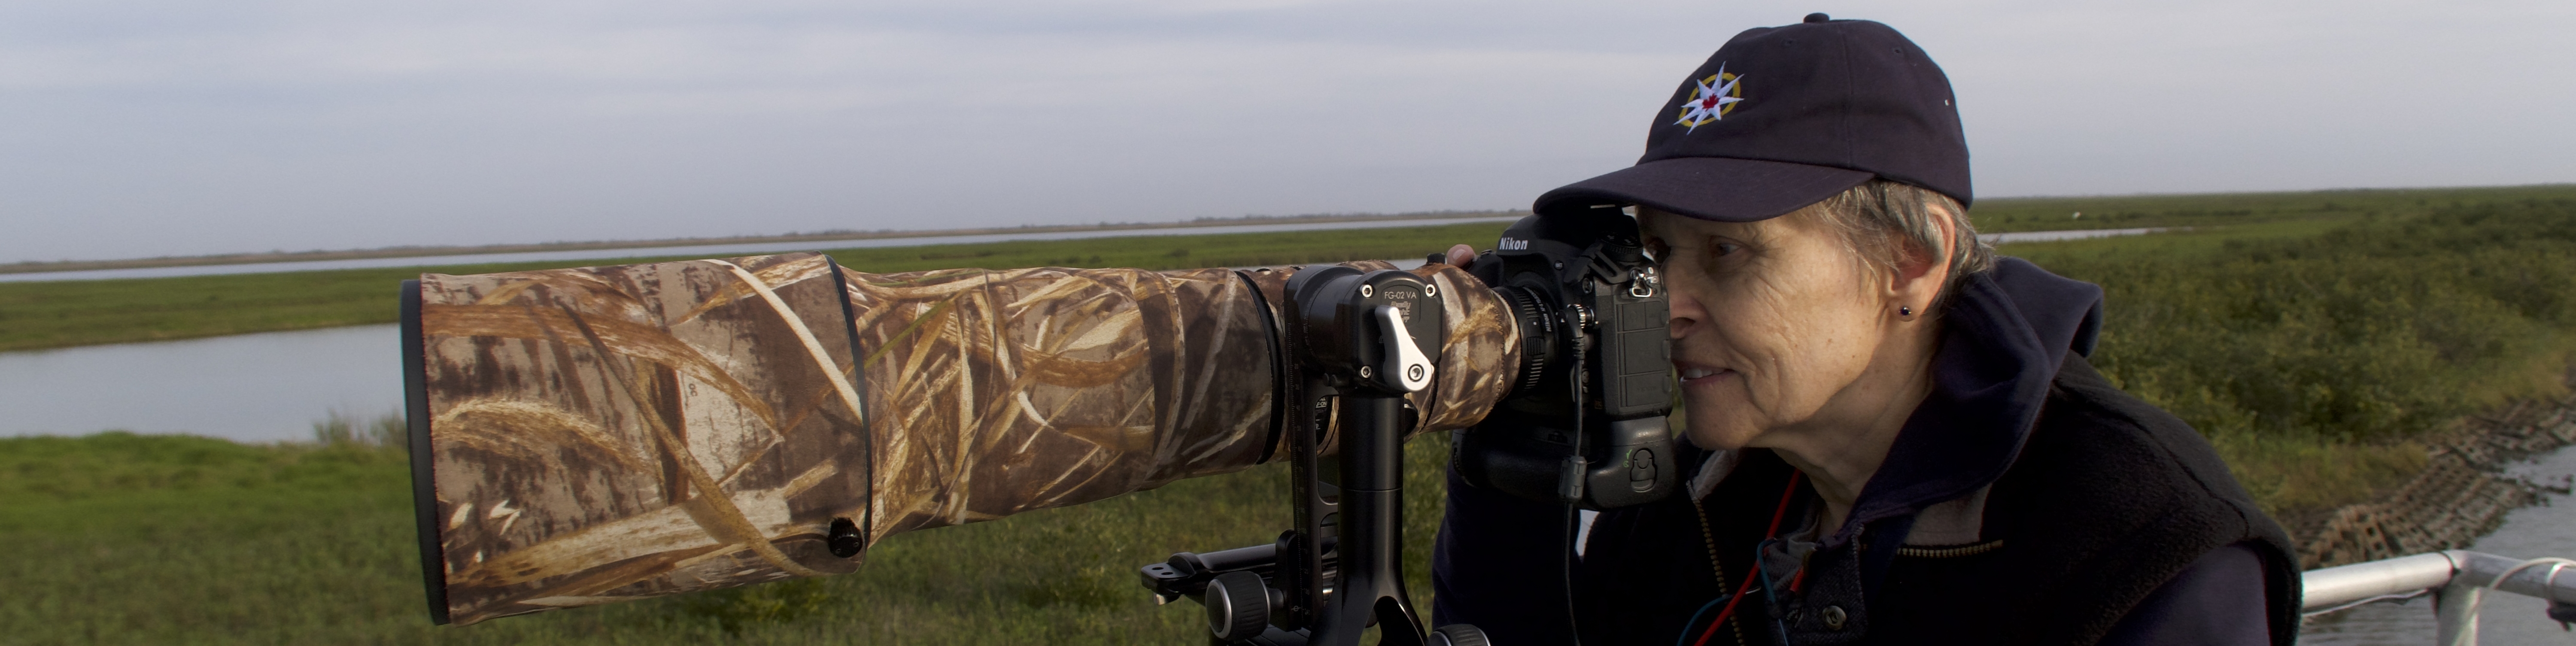 Dr. Bondar photographing Whooping Cranes in Aransas NWR, Texas